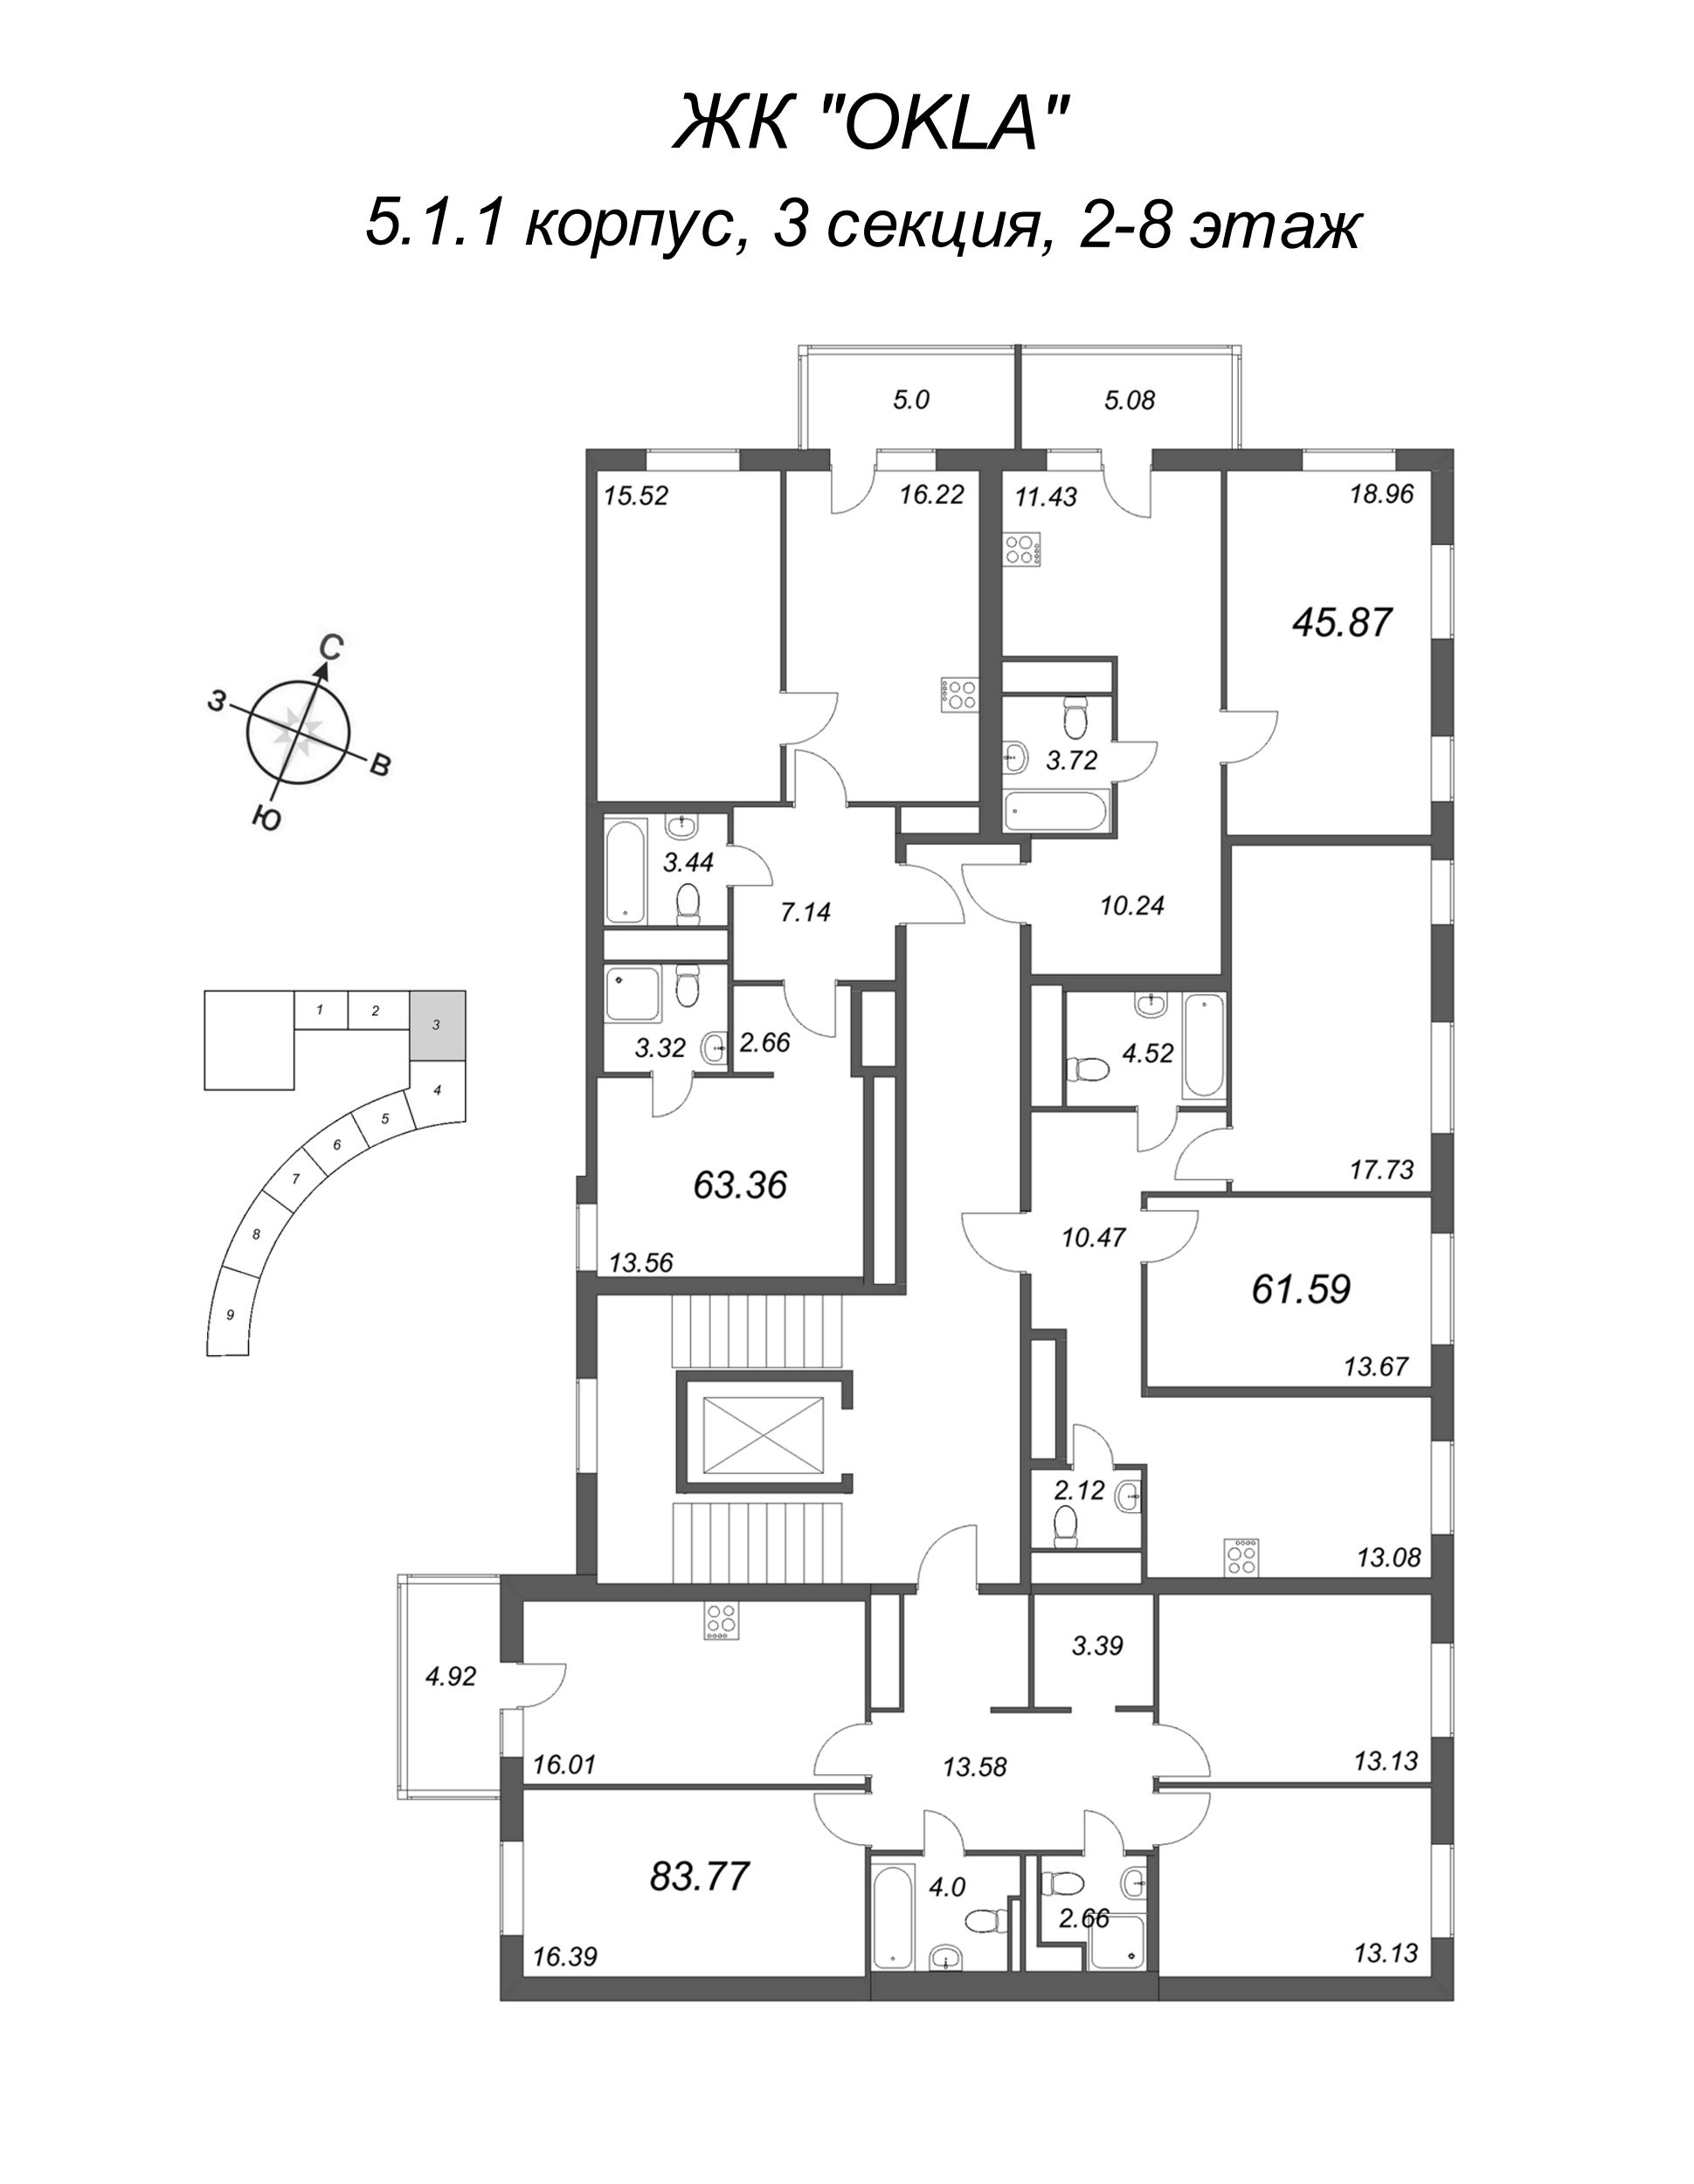 3-комнатная (Евро) квартира, 66.86 м² - планировка этажа